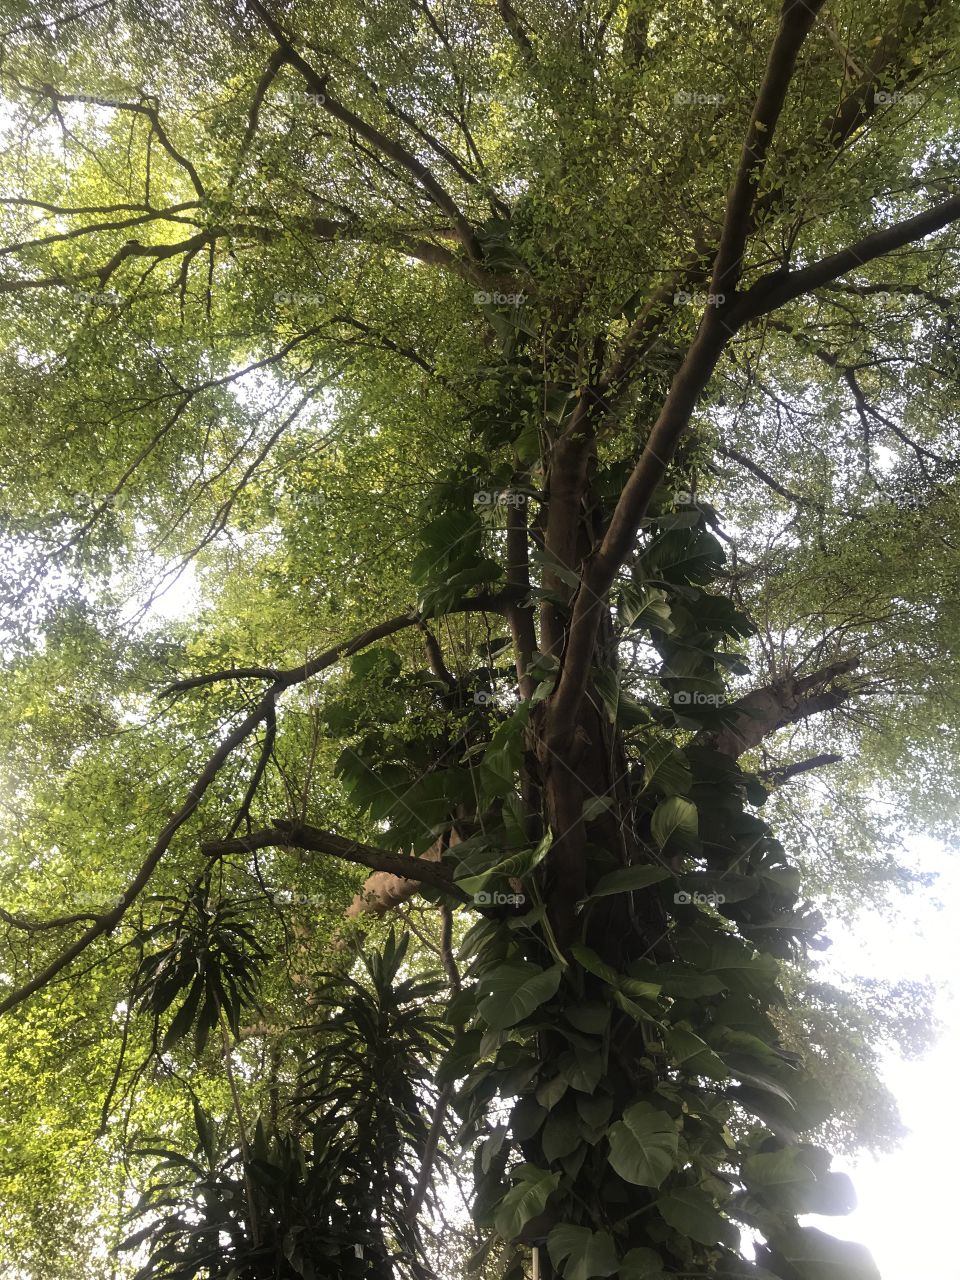 Lush Tropical tree foliage in Surelere, Lagos 